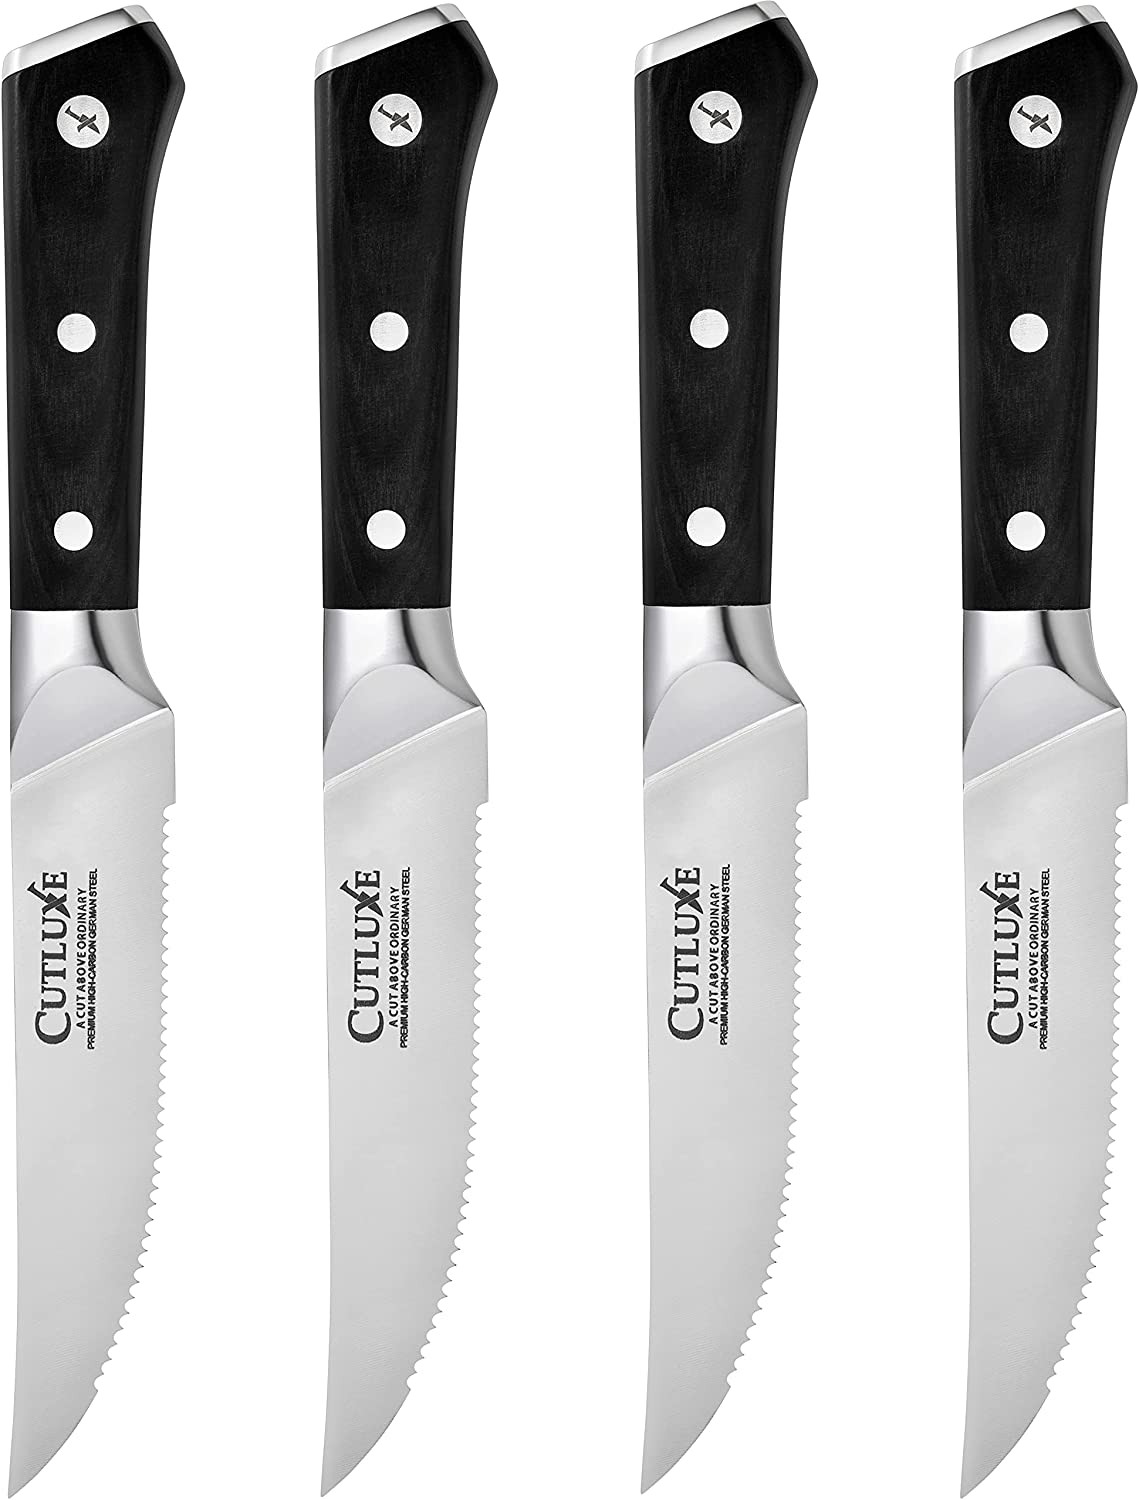 Cutluxe Steak Knives Set - Serrated Steak Knife Set of 4 - Forged High Carbon German Steel - High-end Ergonomic Handle - Artisan Series